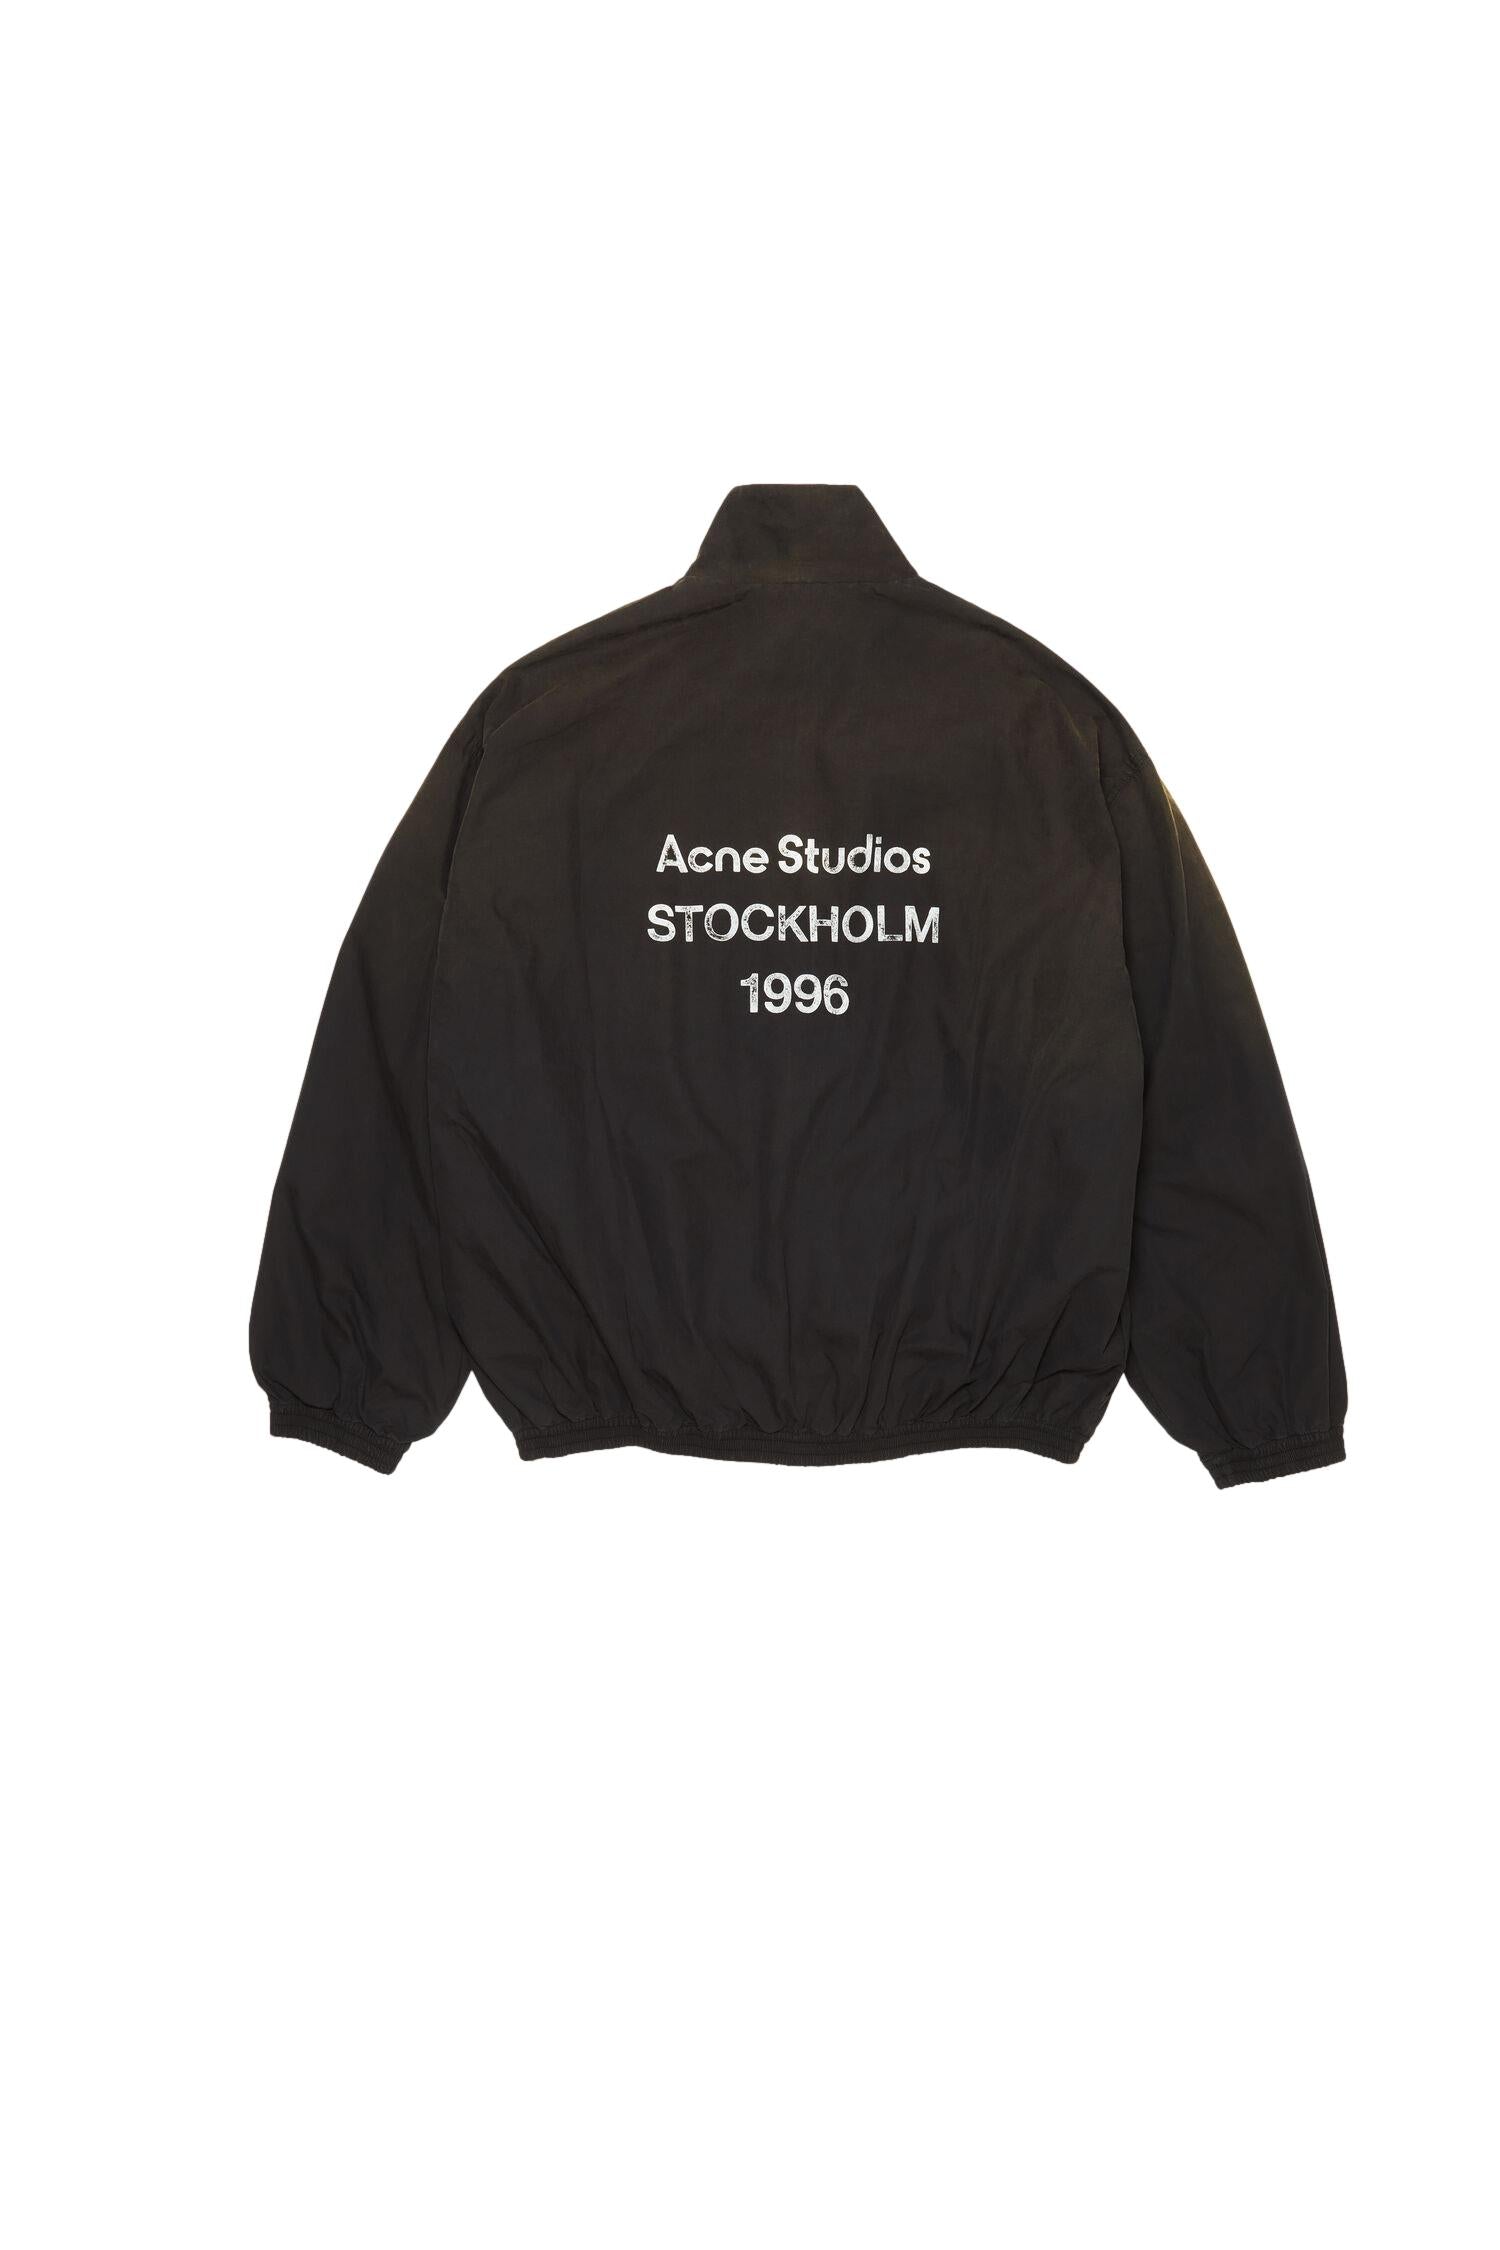 Acne Logo Zipper Jacket Jakke Sort - [modostore.no]